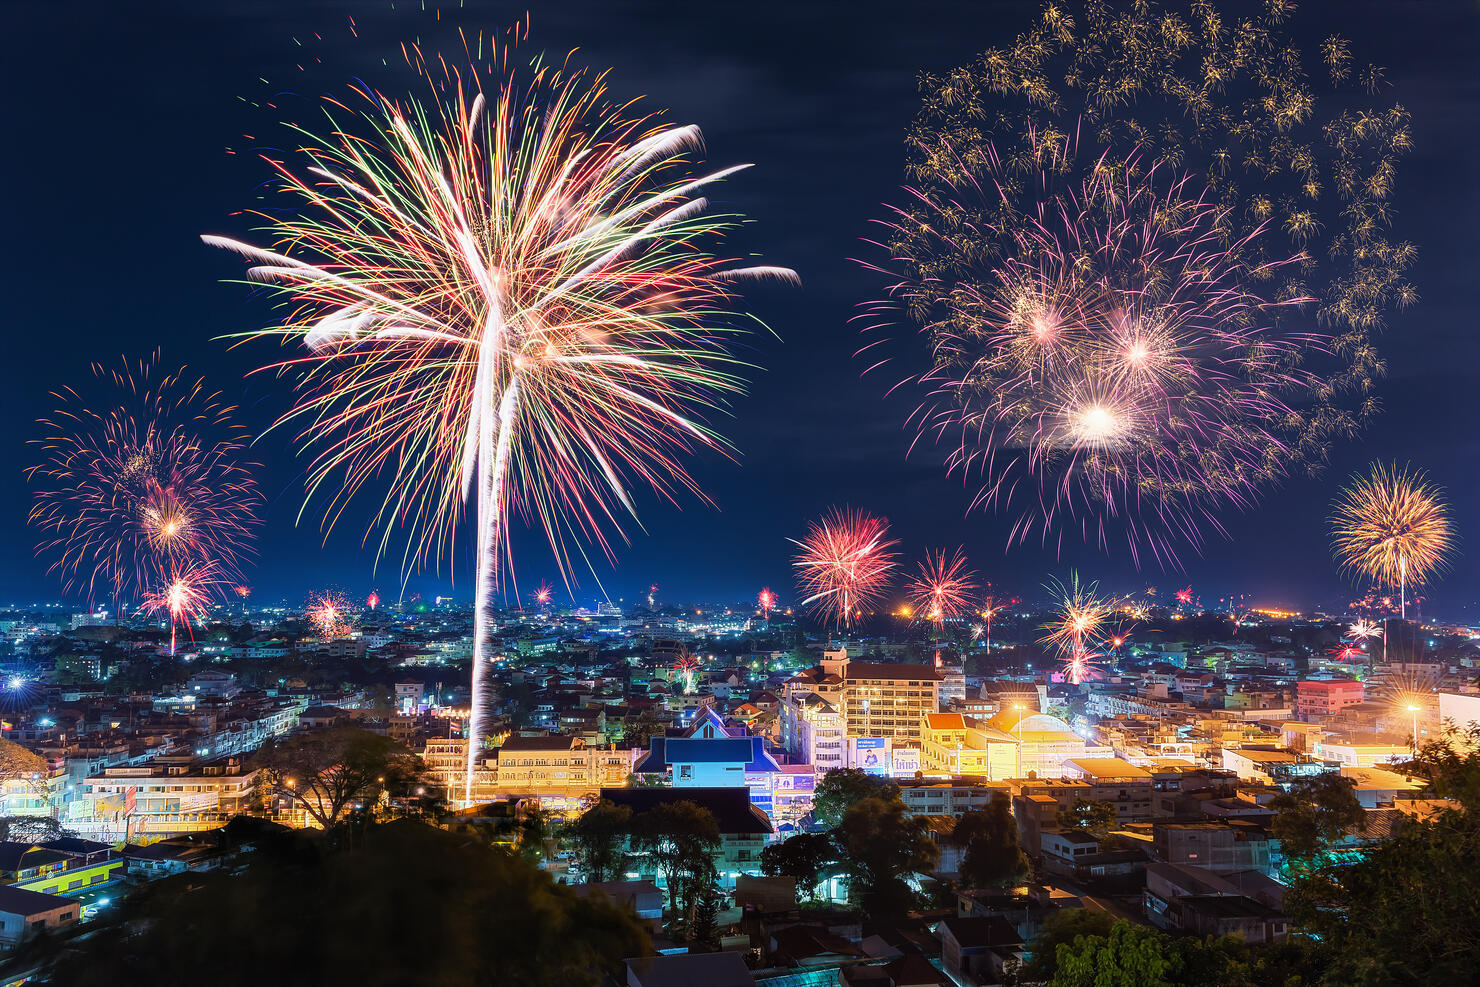 New year's fireworks celebration